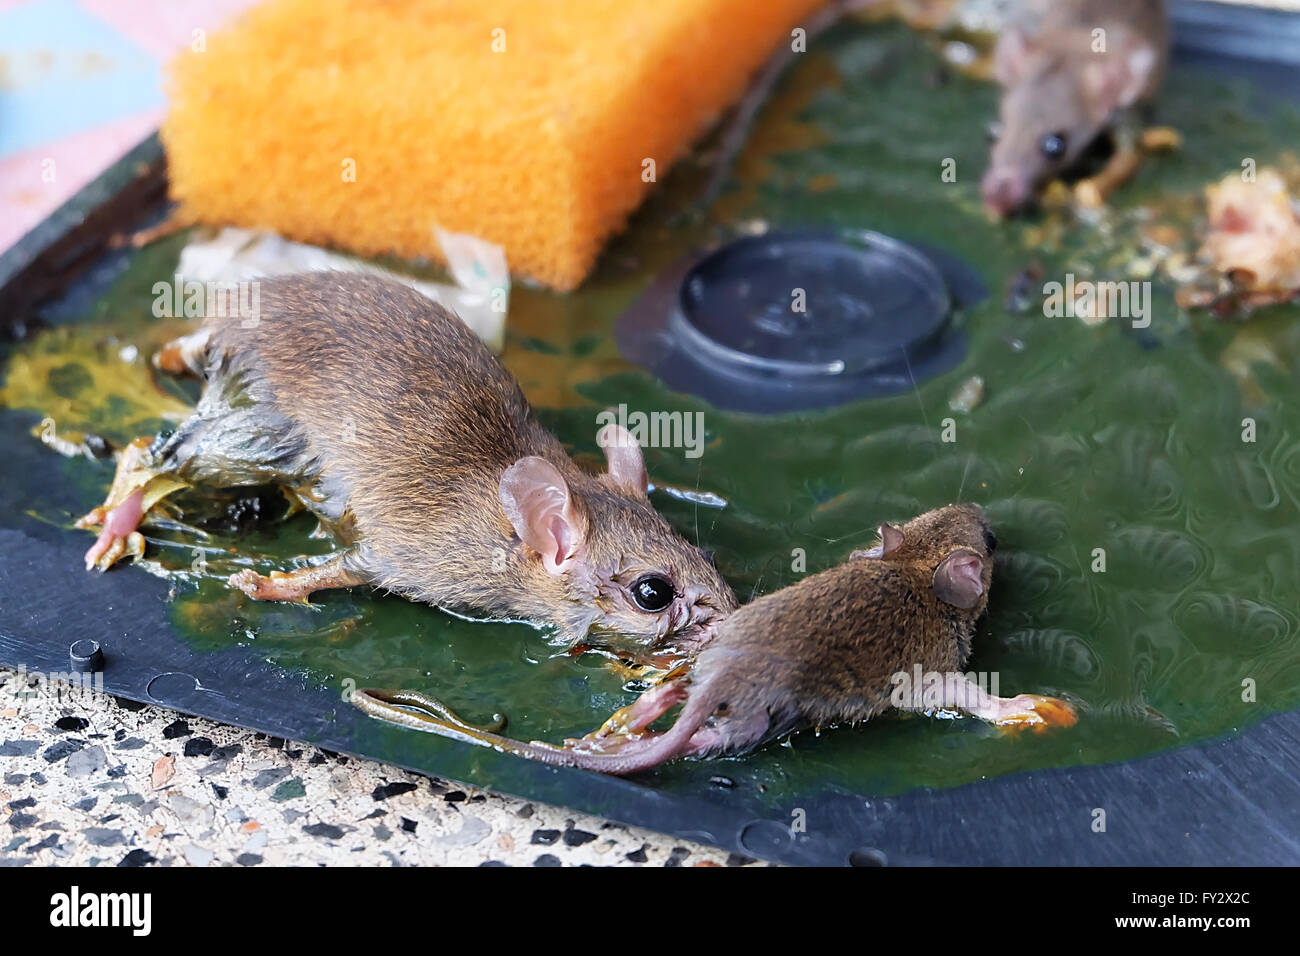 1,477 Mouse Glue Trap Images, Stock Photos, 3D objects, & Vectors